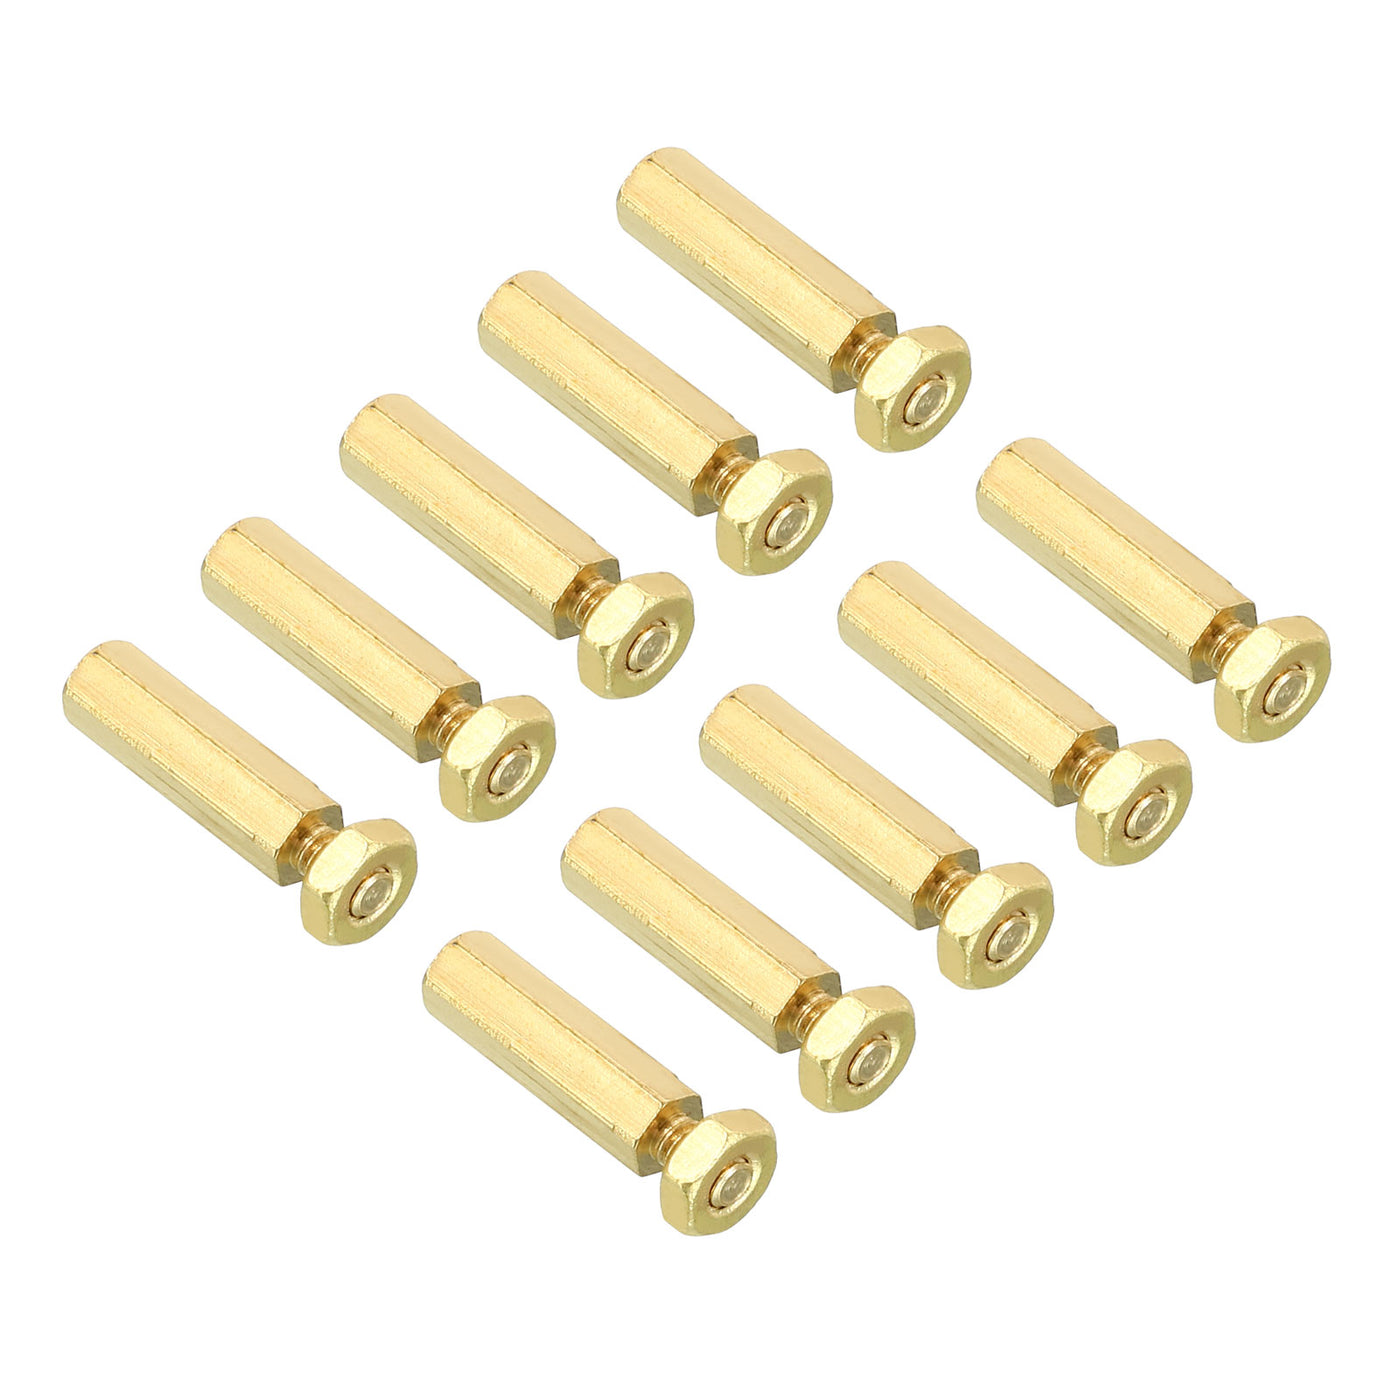 Harfington 10mm+3mm M2 Standoff Screws 100 Pack Brass Hex PCB Standoffs Nuts Gold Tone